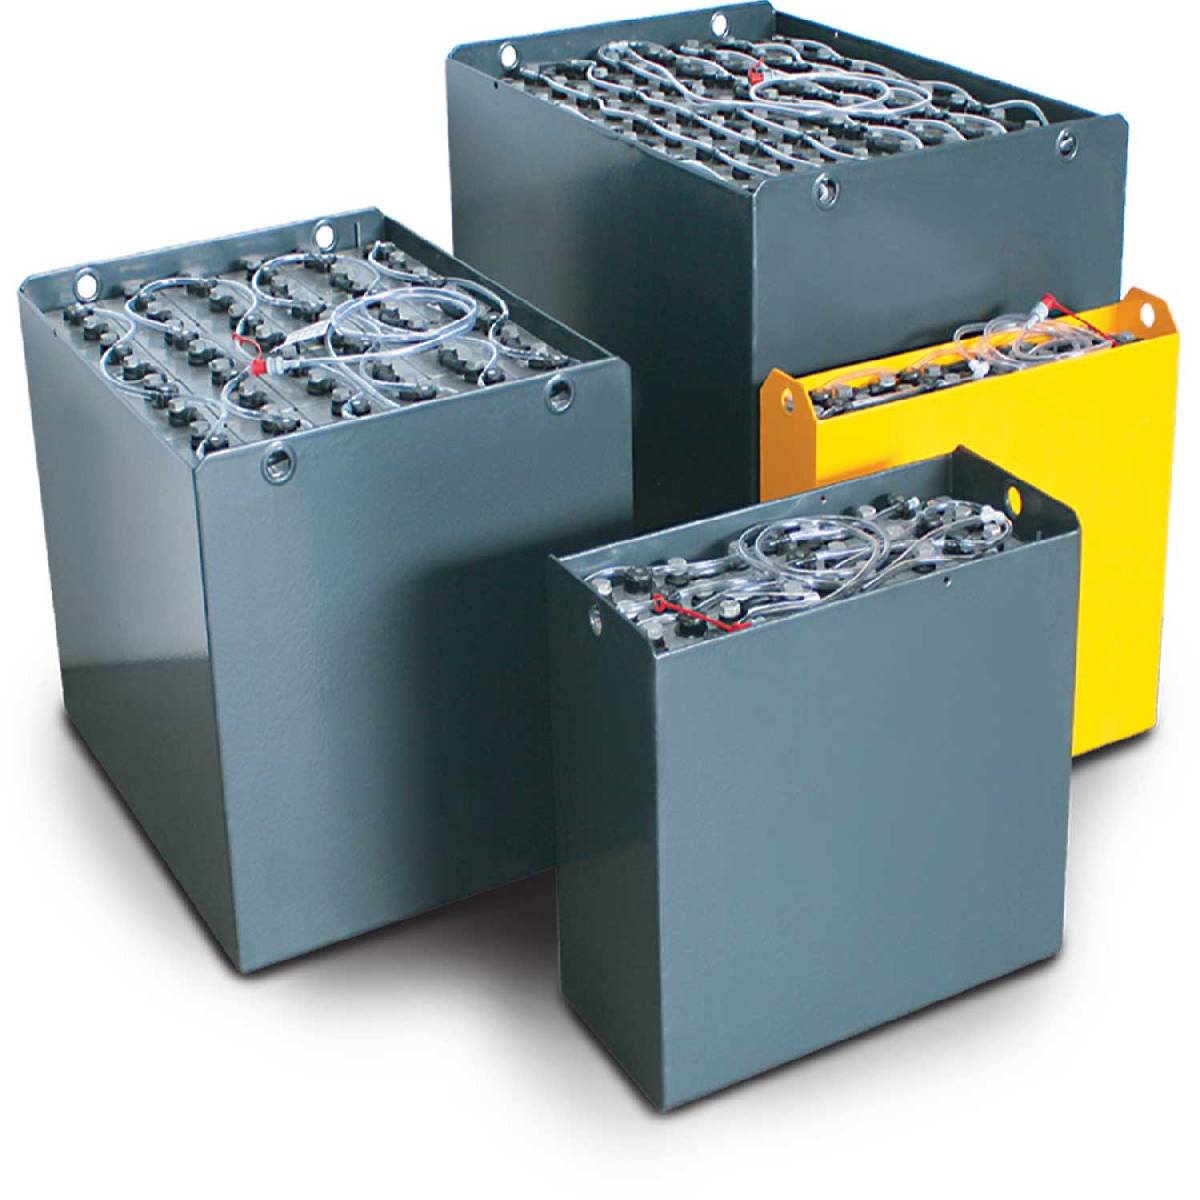 12V Gabelstaplerbatterie 5 PzS 300 Ah (740 * 220 * 380mm L/B/H) Trog 42634700 inkl. Aquamatik von Q-Batteries